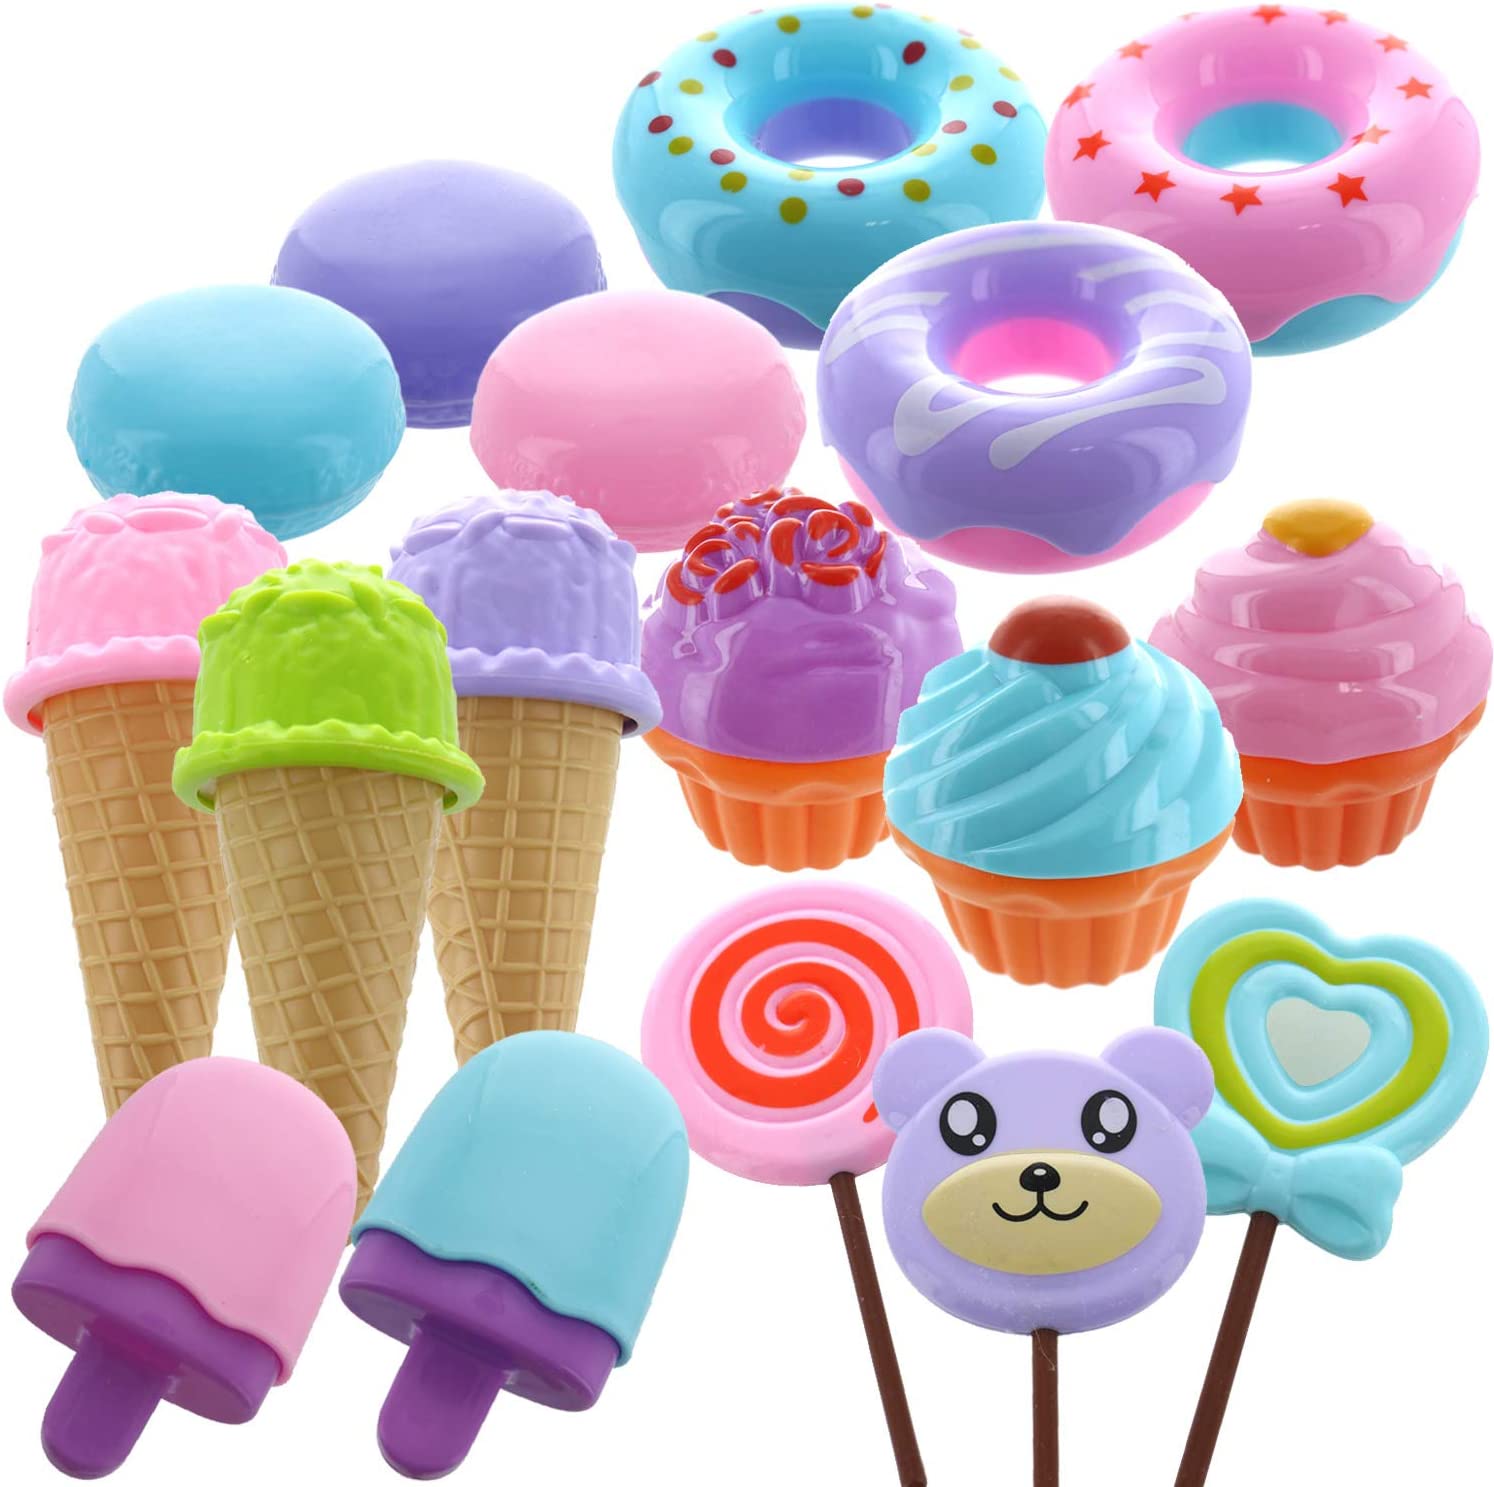 Pretend Play Food Dessert Set Toy for Kids